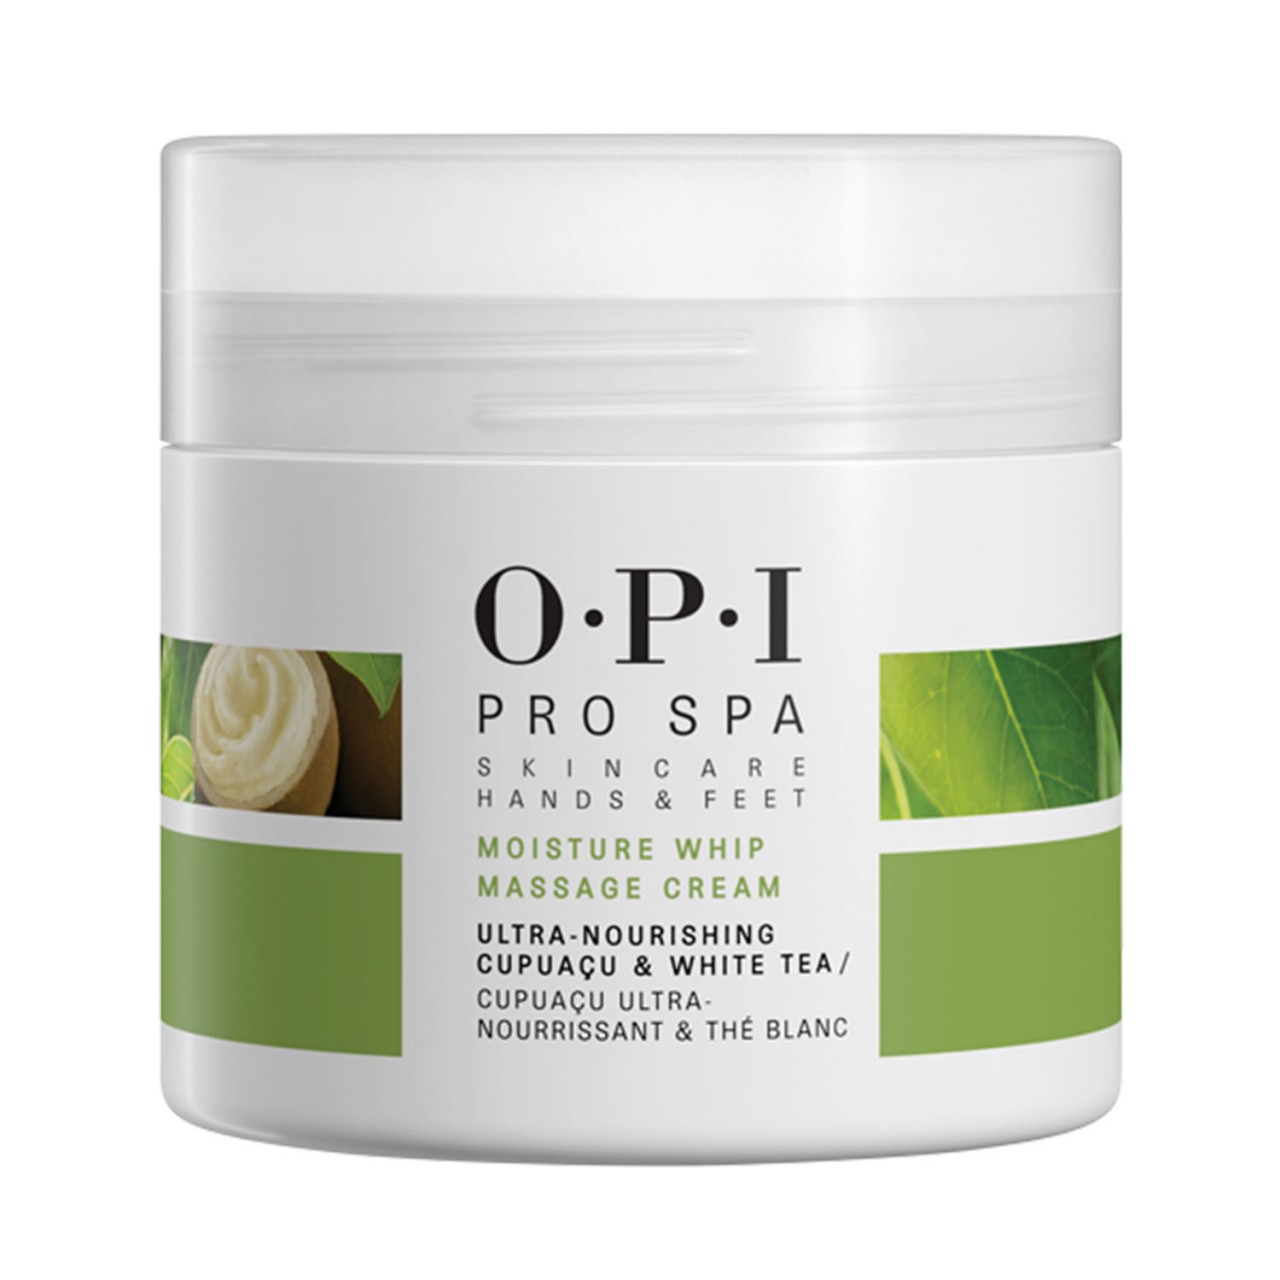 Pro Spa - Moisture Whip Massage Cream von OPI